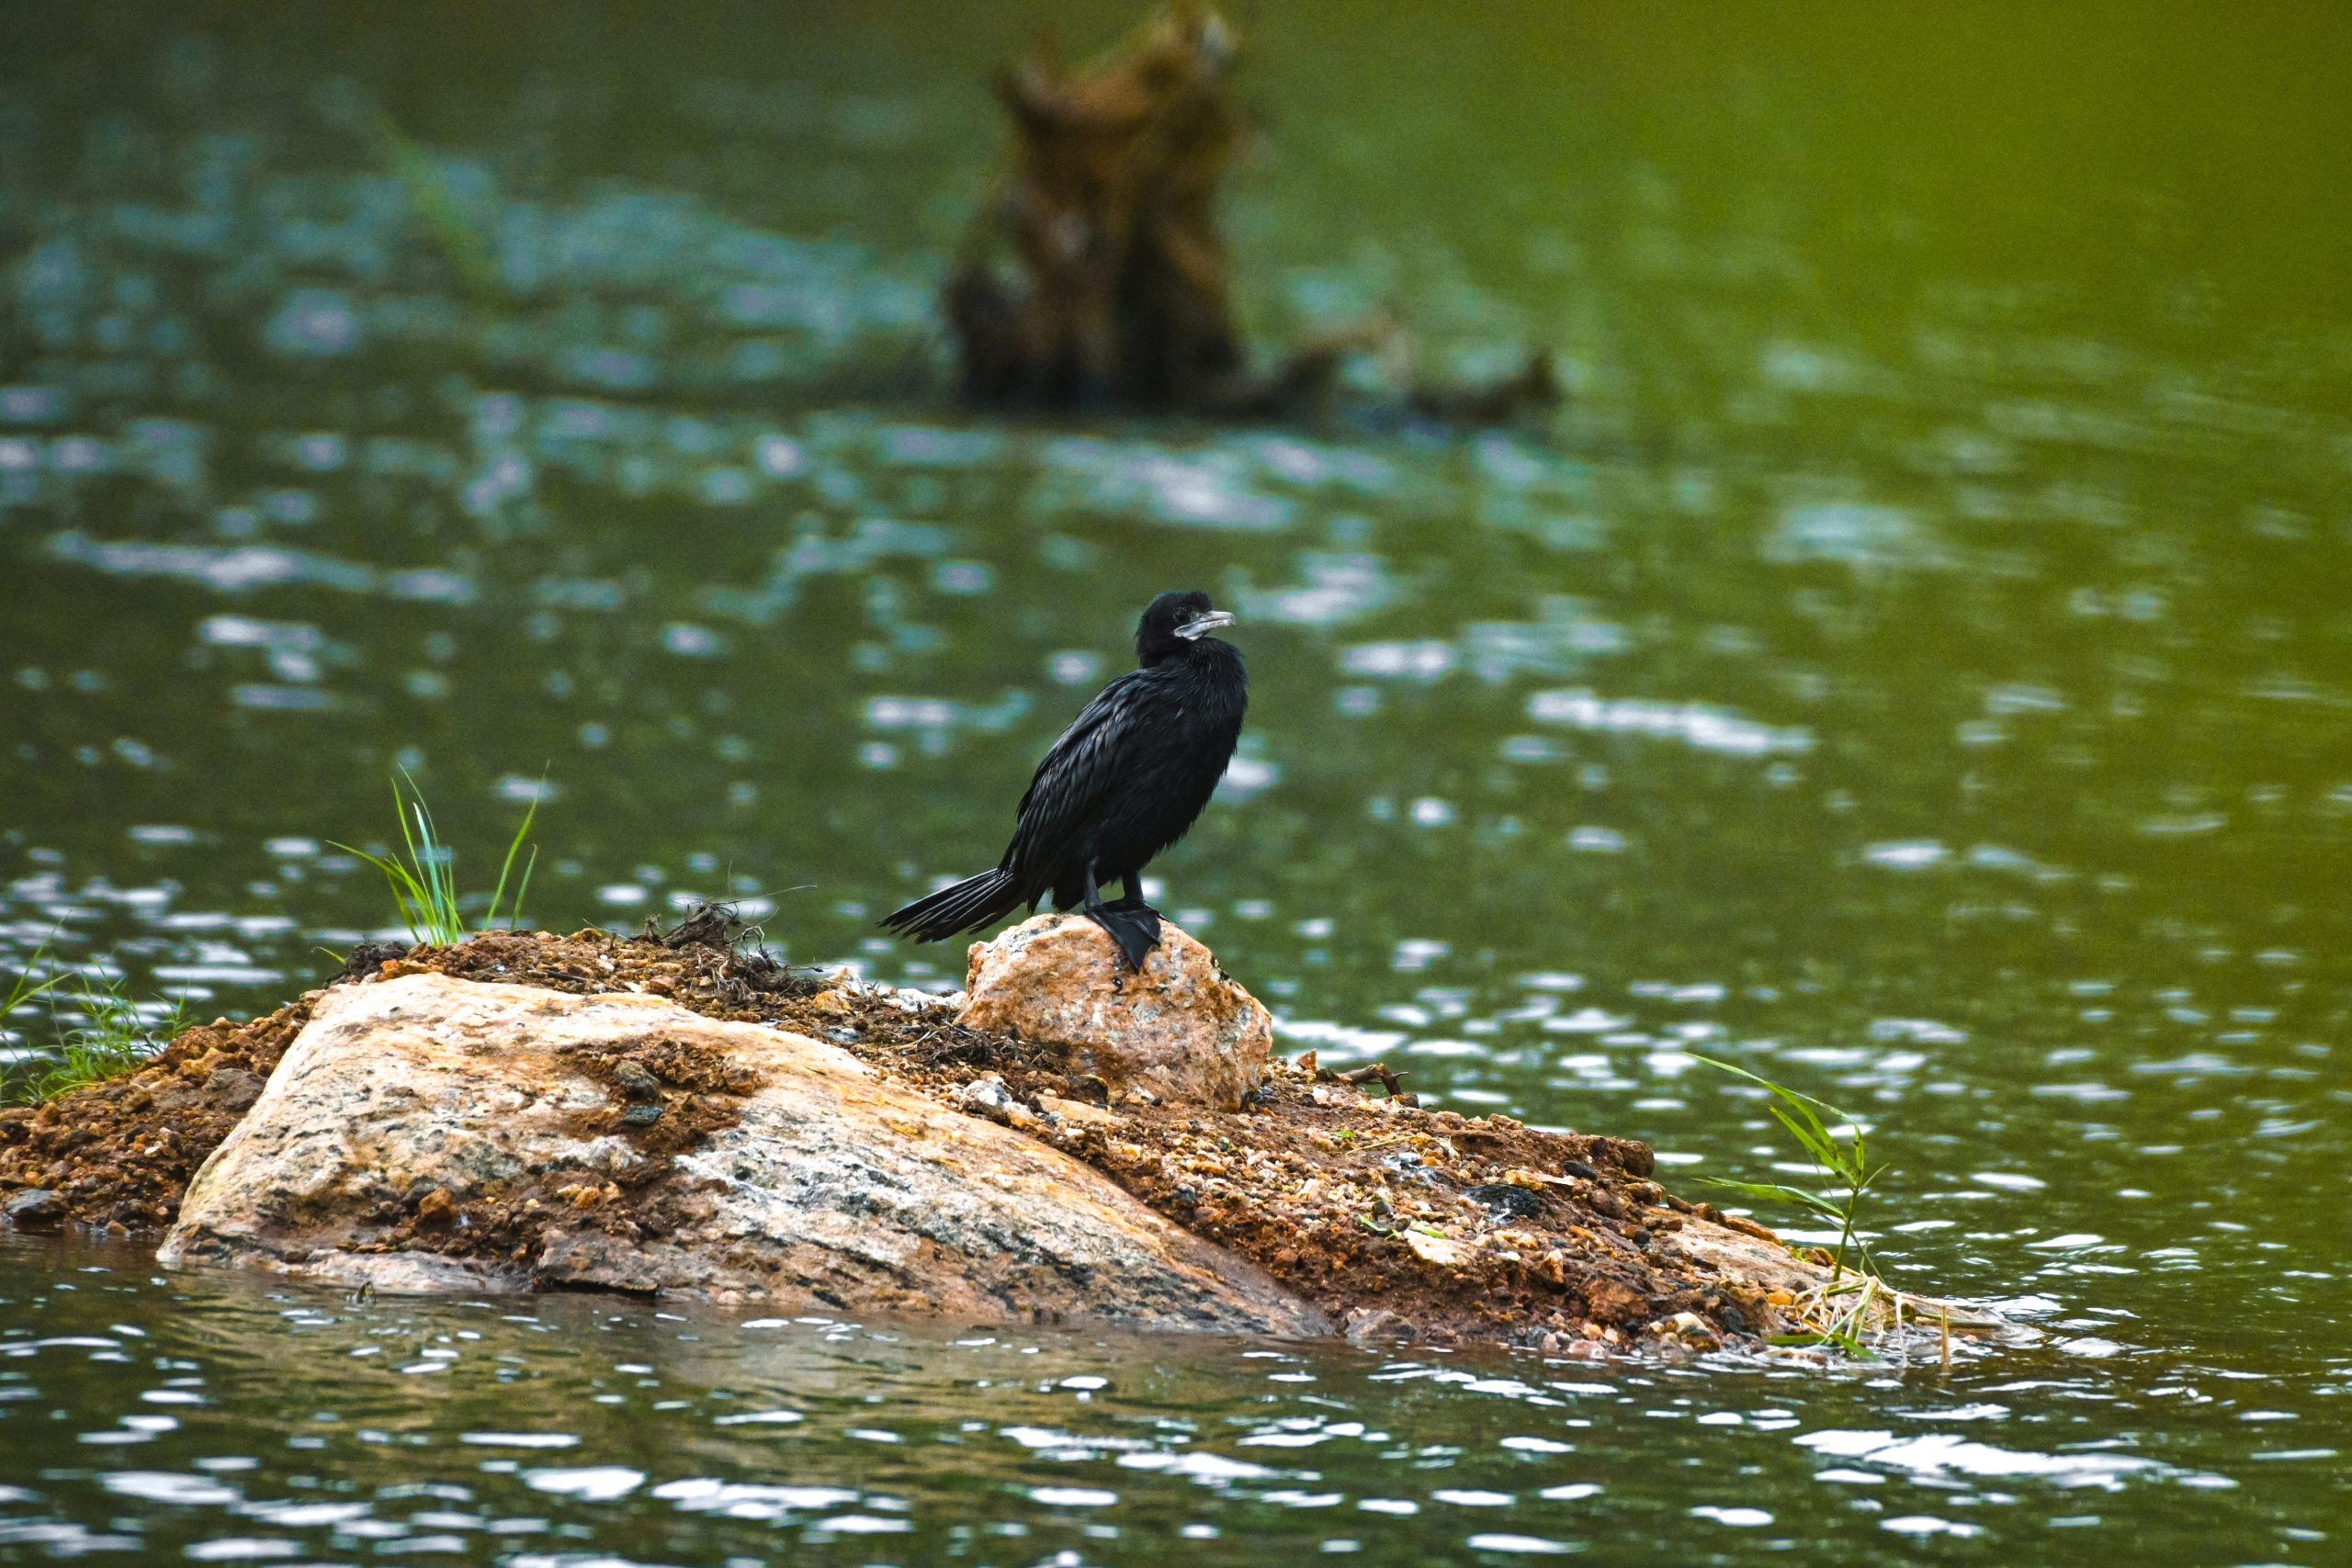 A cormorant on a water rock